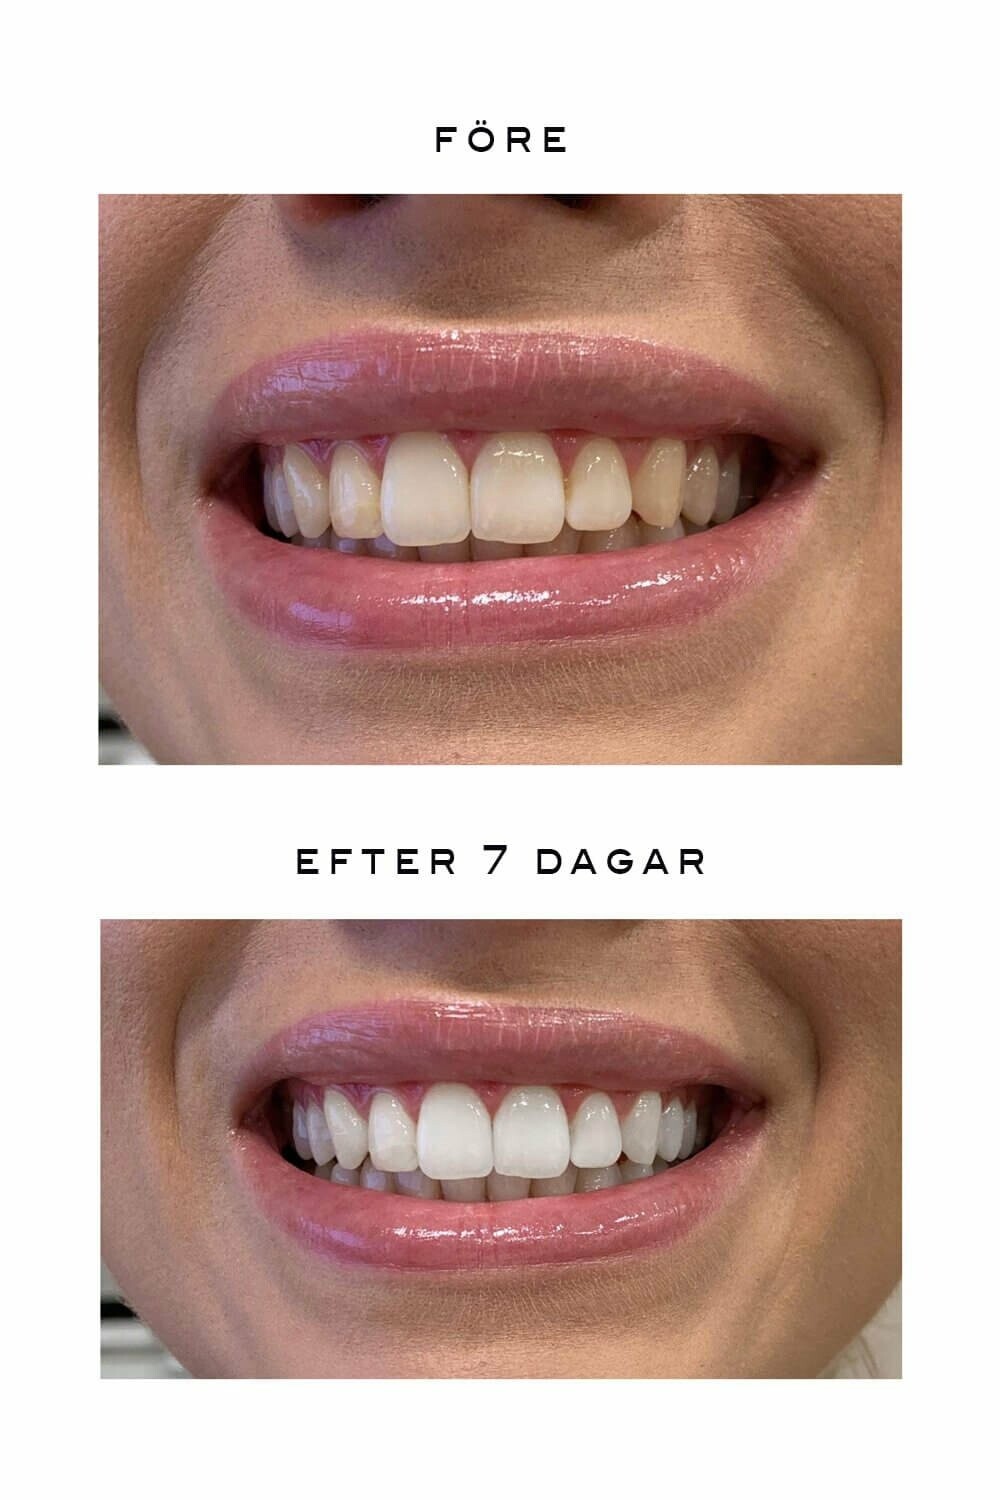 DM Teeth Whitening 30 g